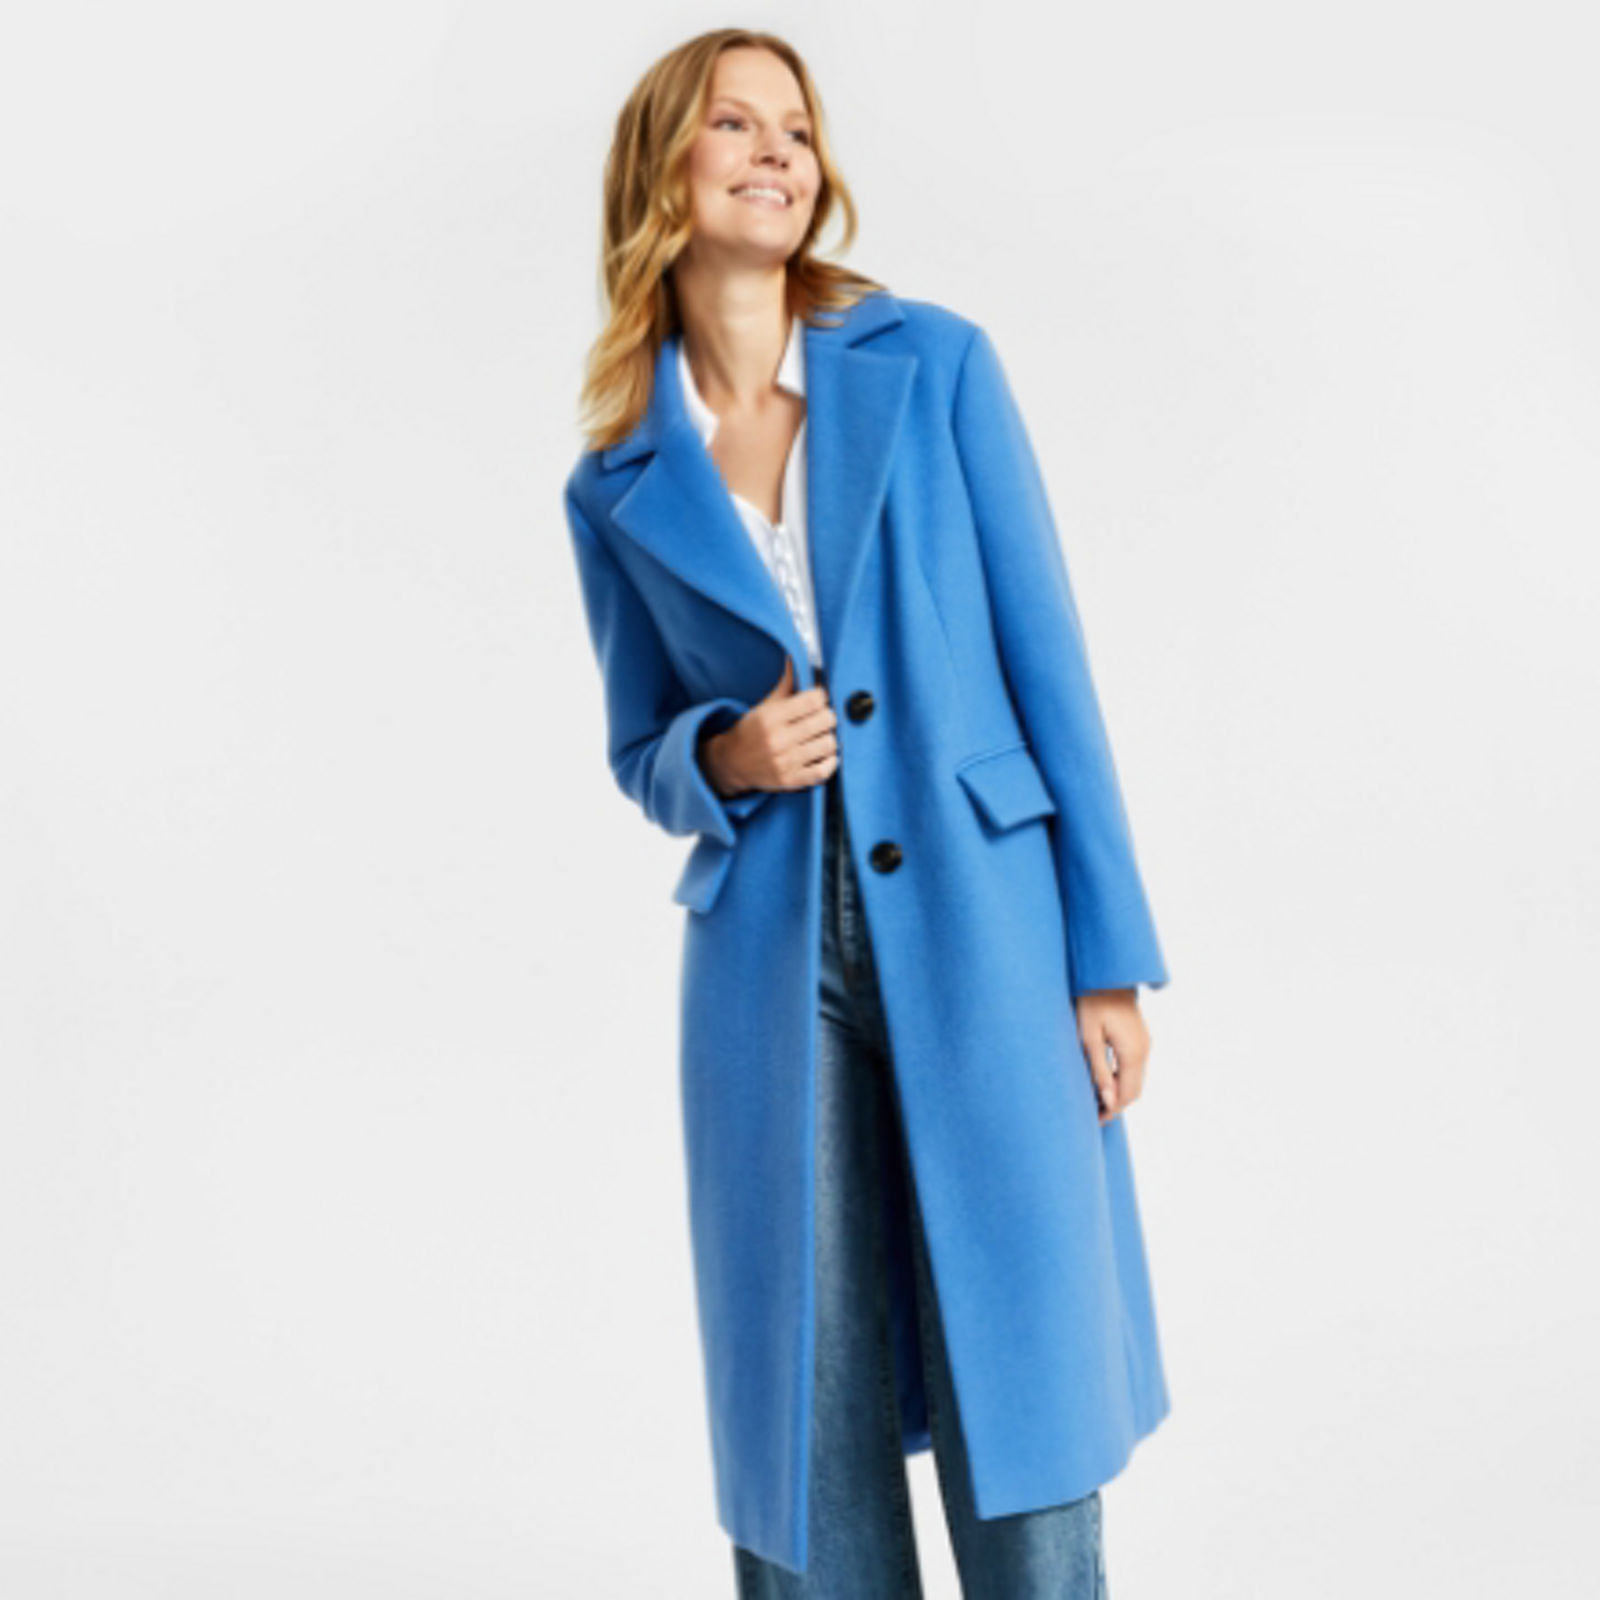 Women's Coats & Jackets - Macy's